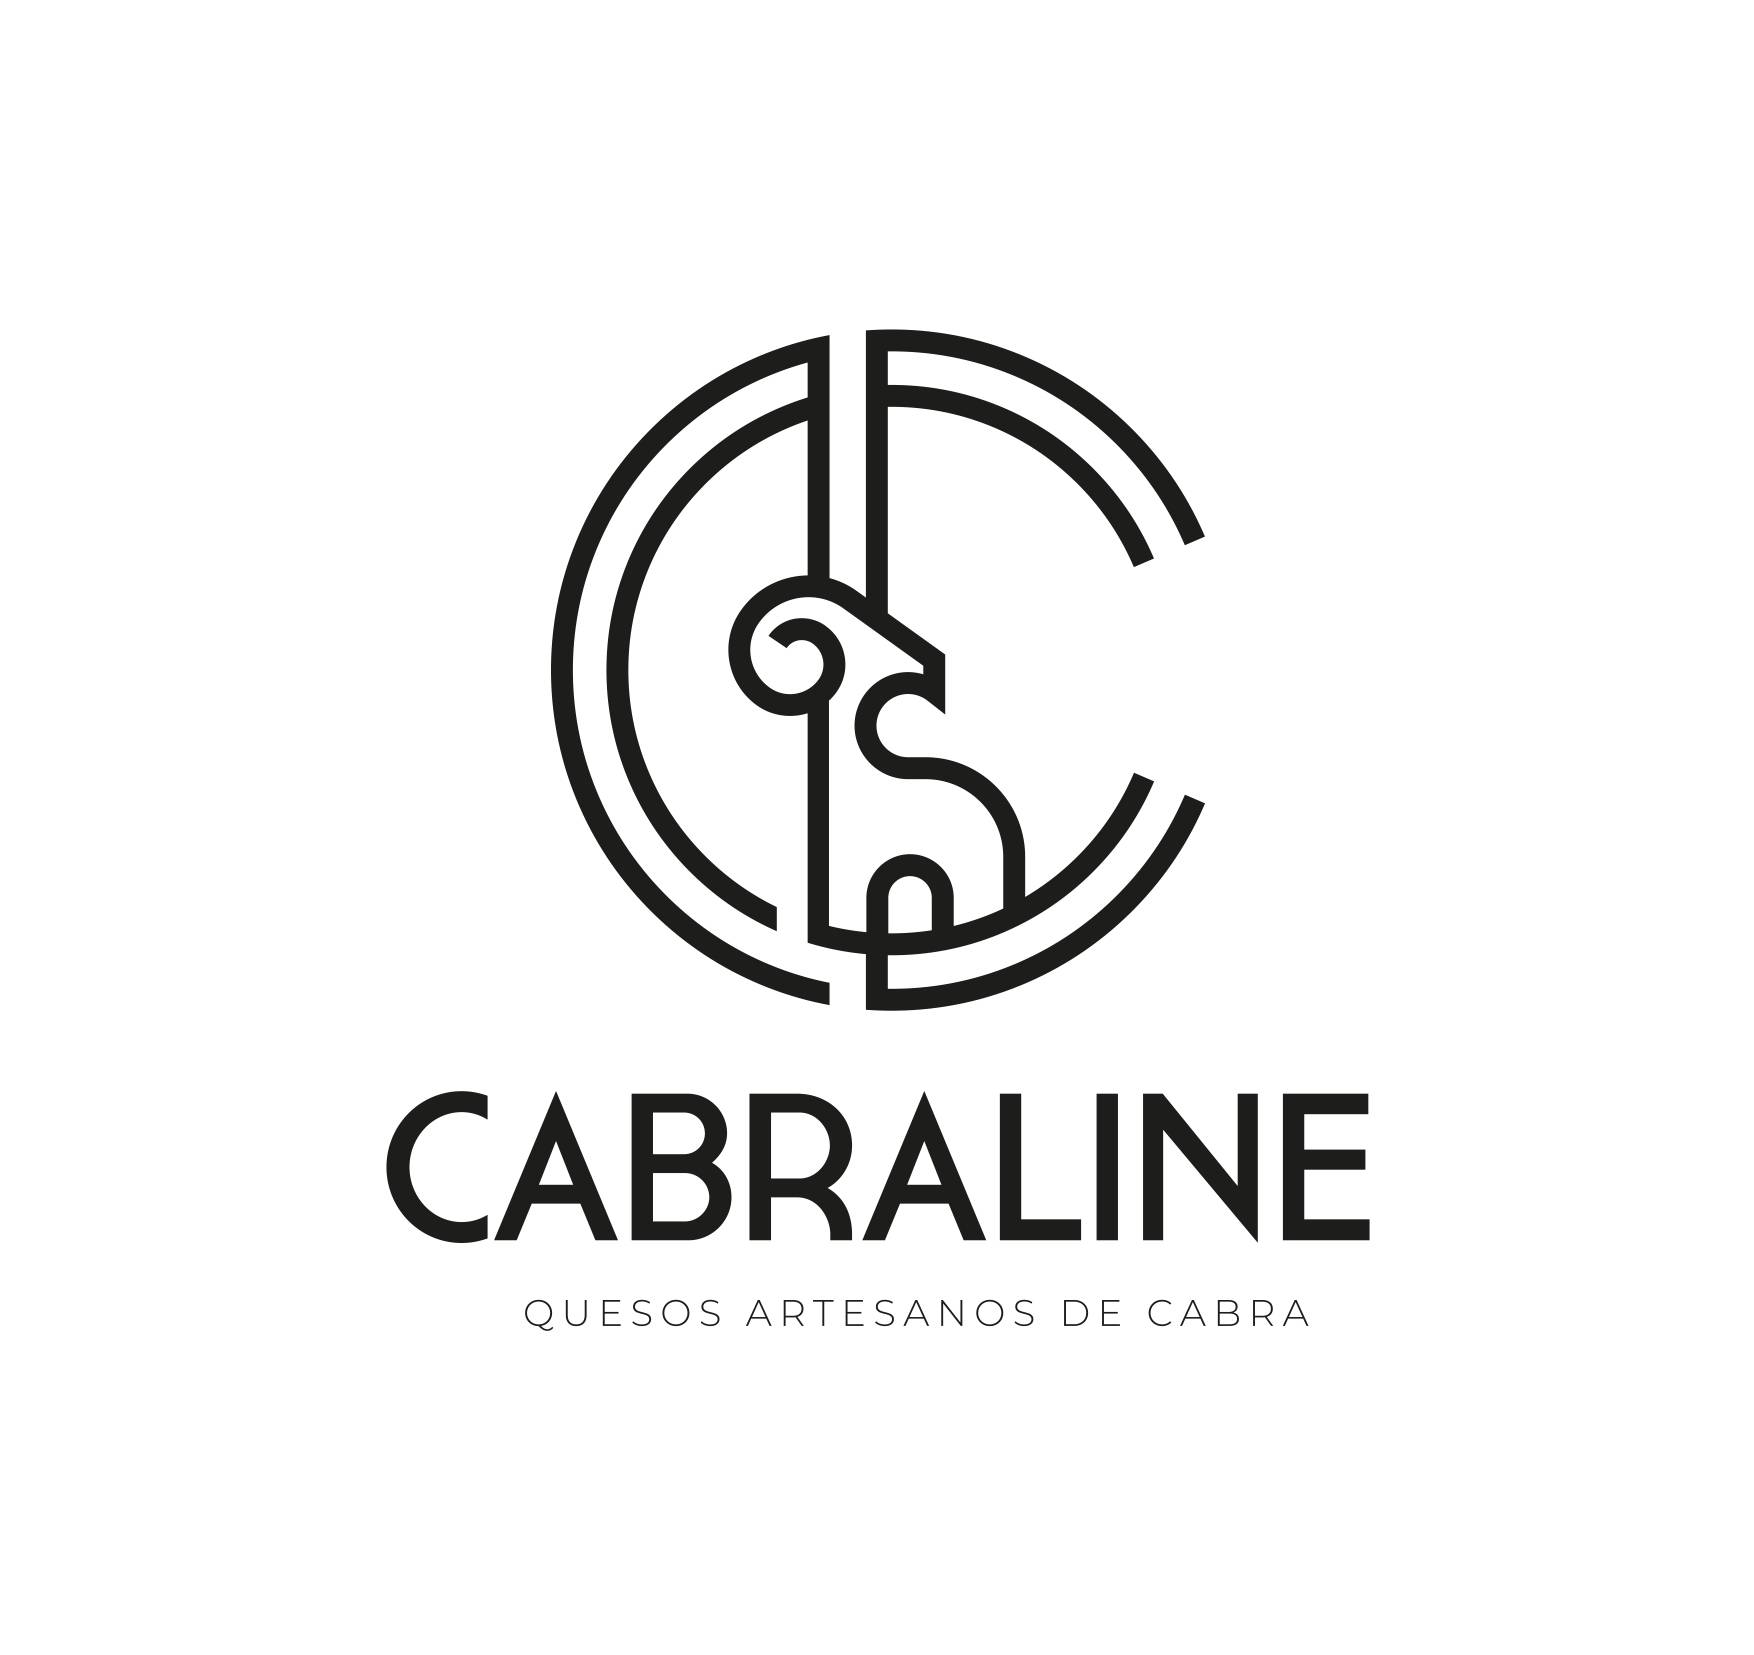 cabraline logo negro blanco 1 page 0001